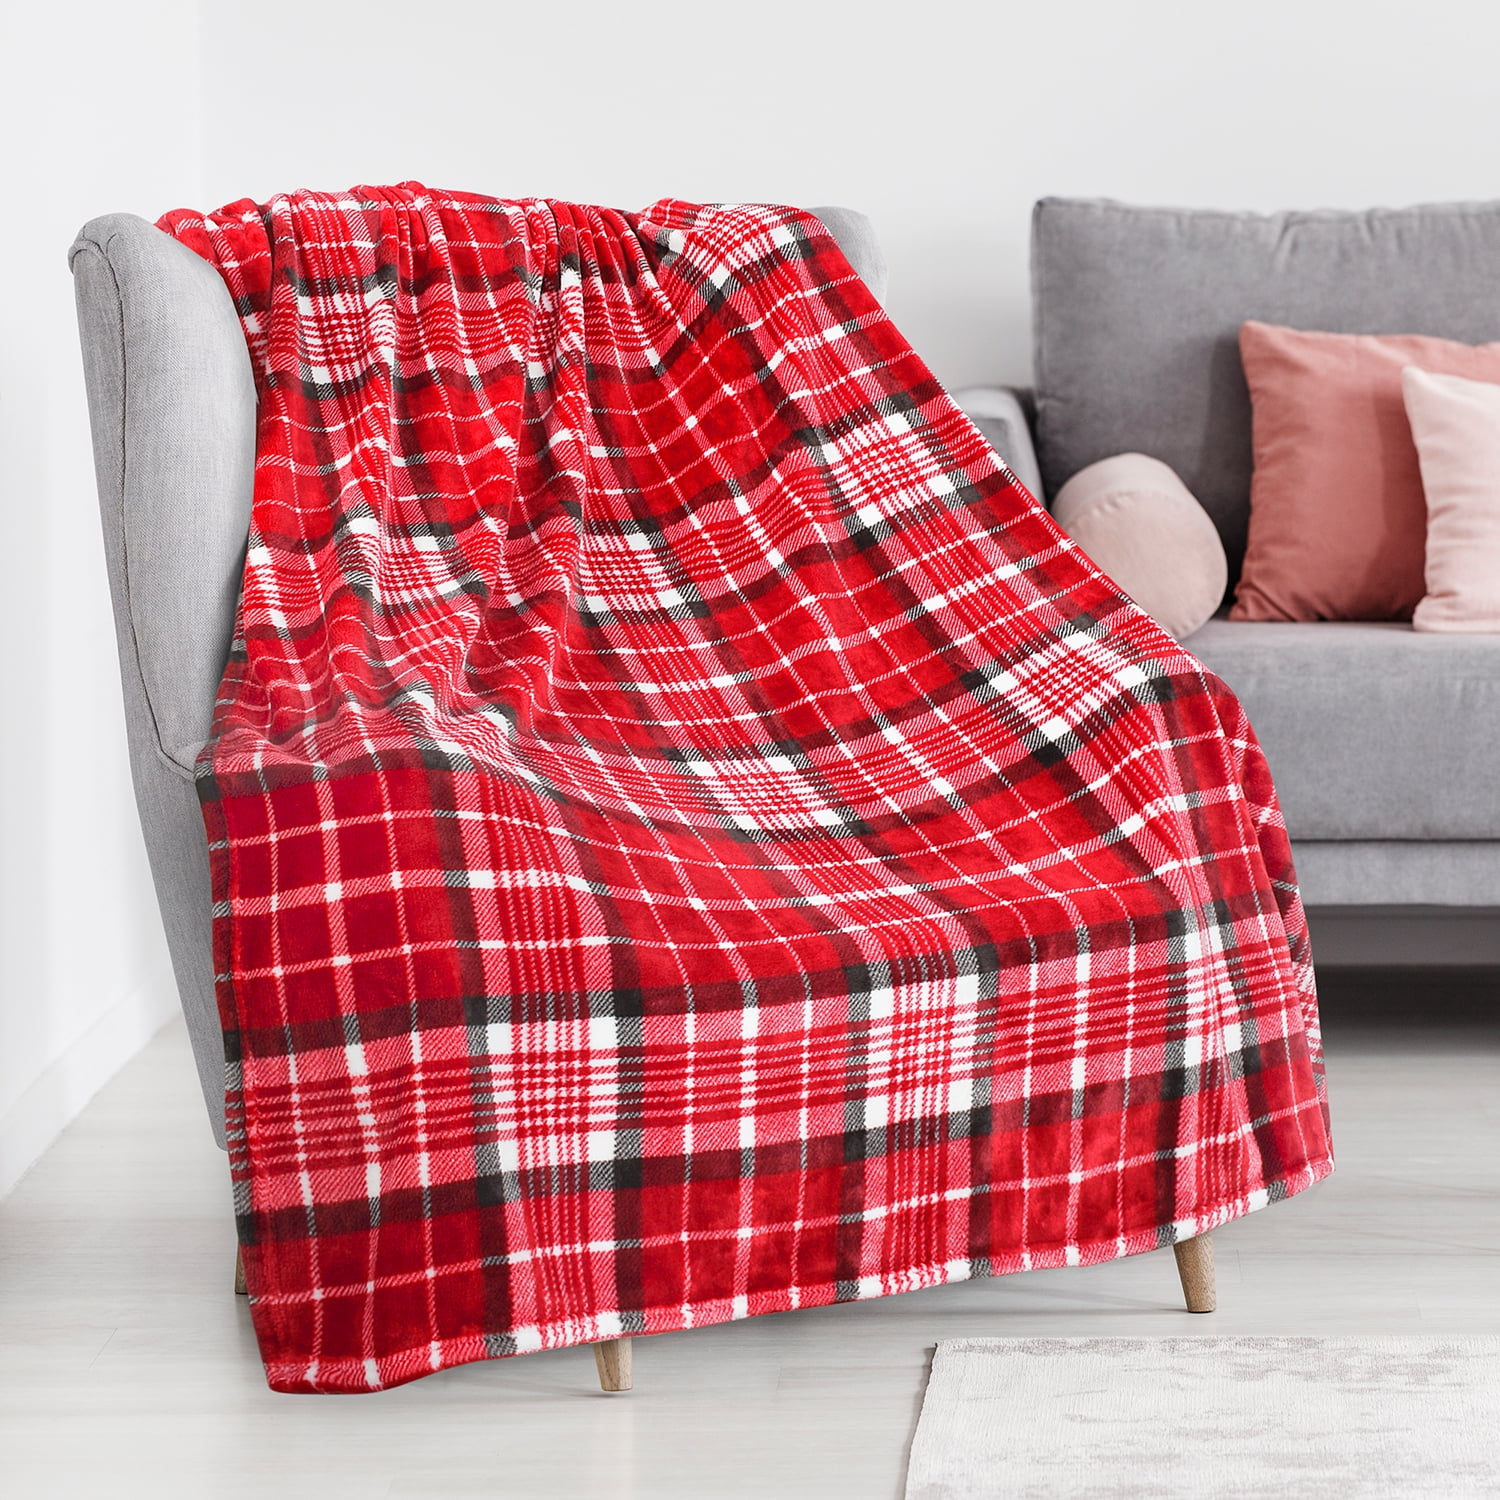 Tirrinia Red Buffalo Plaid Fleece Blanket TV Throw 50 x 60, Super Soft  Warm Comfy Flannel Fleece Bedding Couch Cabin Throw Decorative Blankets